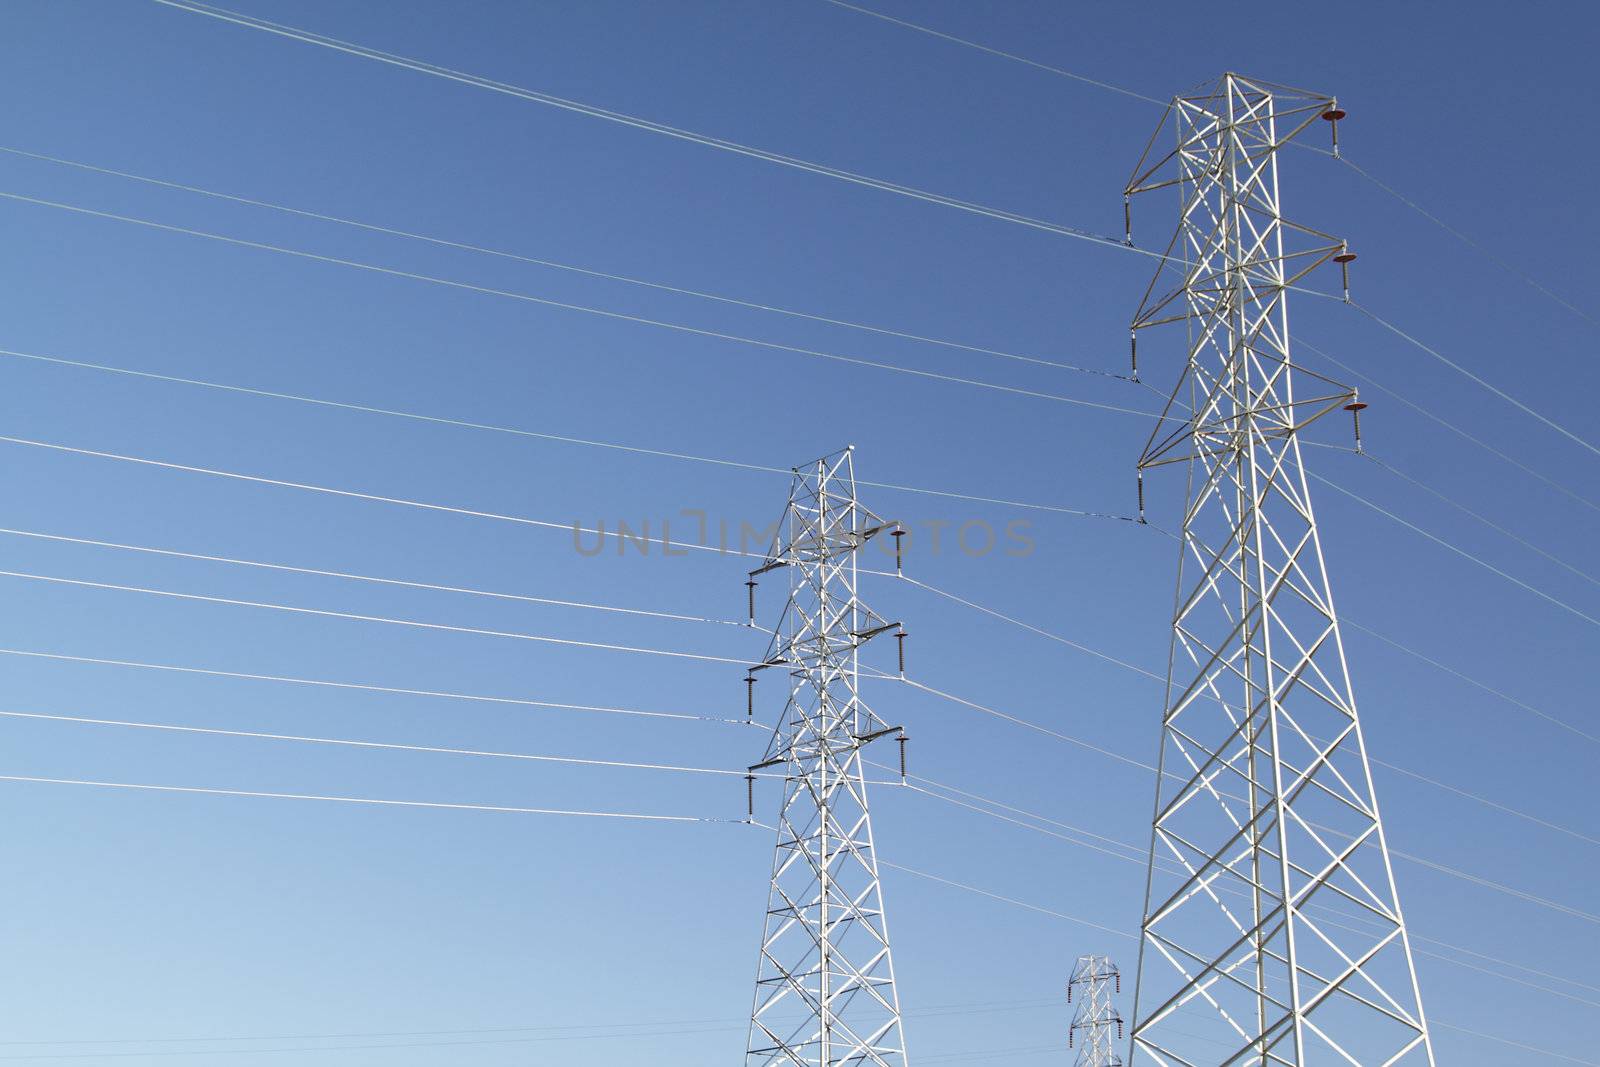 High voltage power lines over blue sky